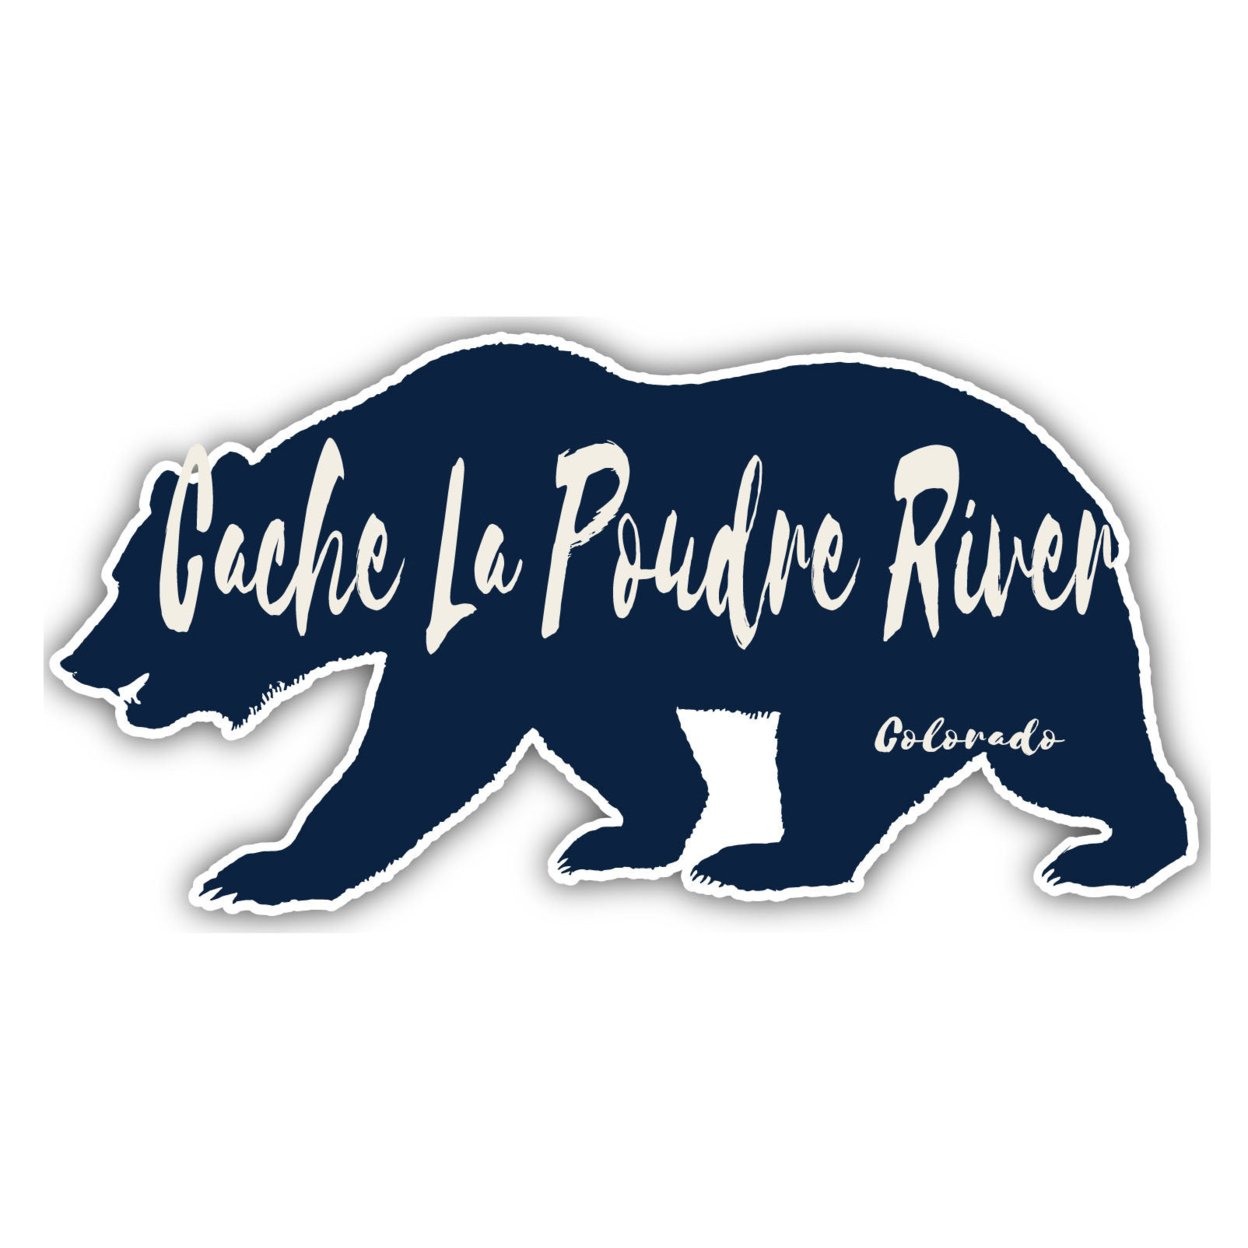 Cache La Poudre River Colorado Souvenir Decorative Stickers (Choose Theme And Size) - Single Unit, 12-Inch, Tent